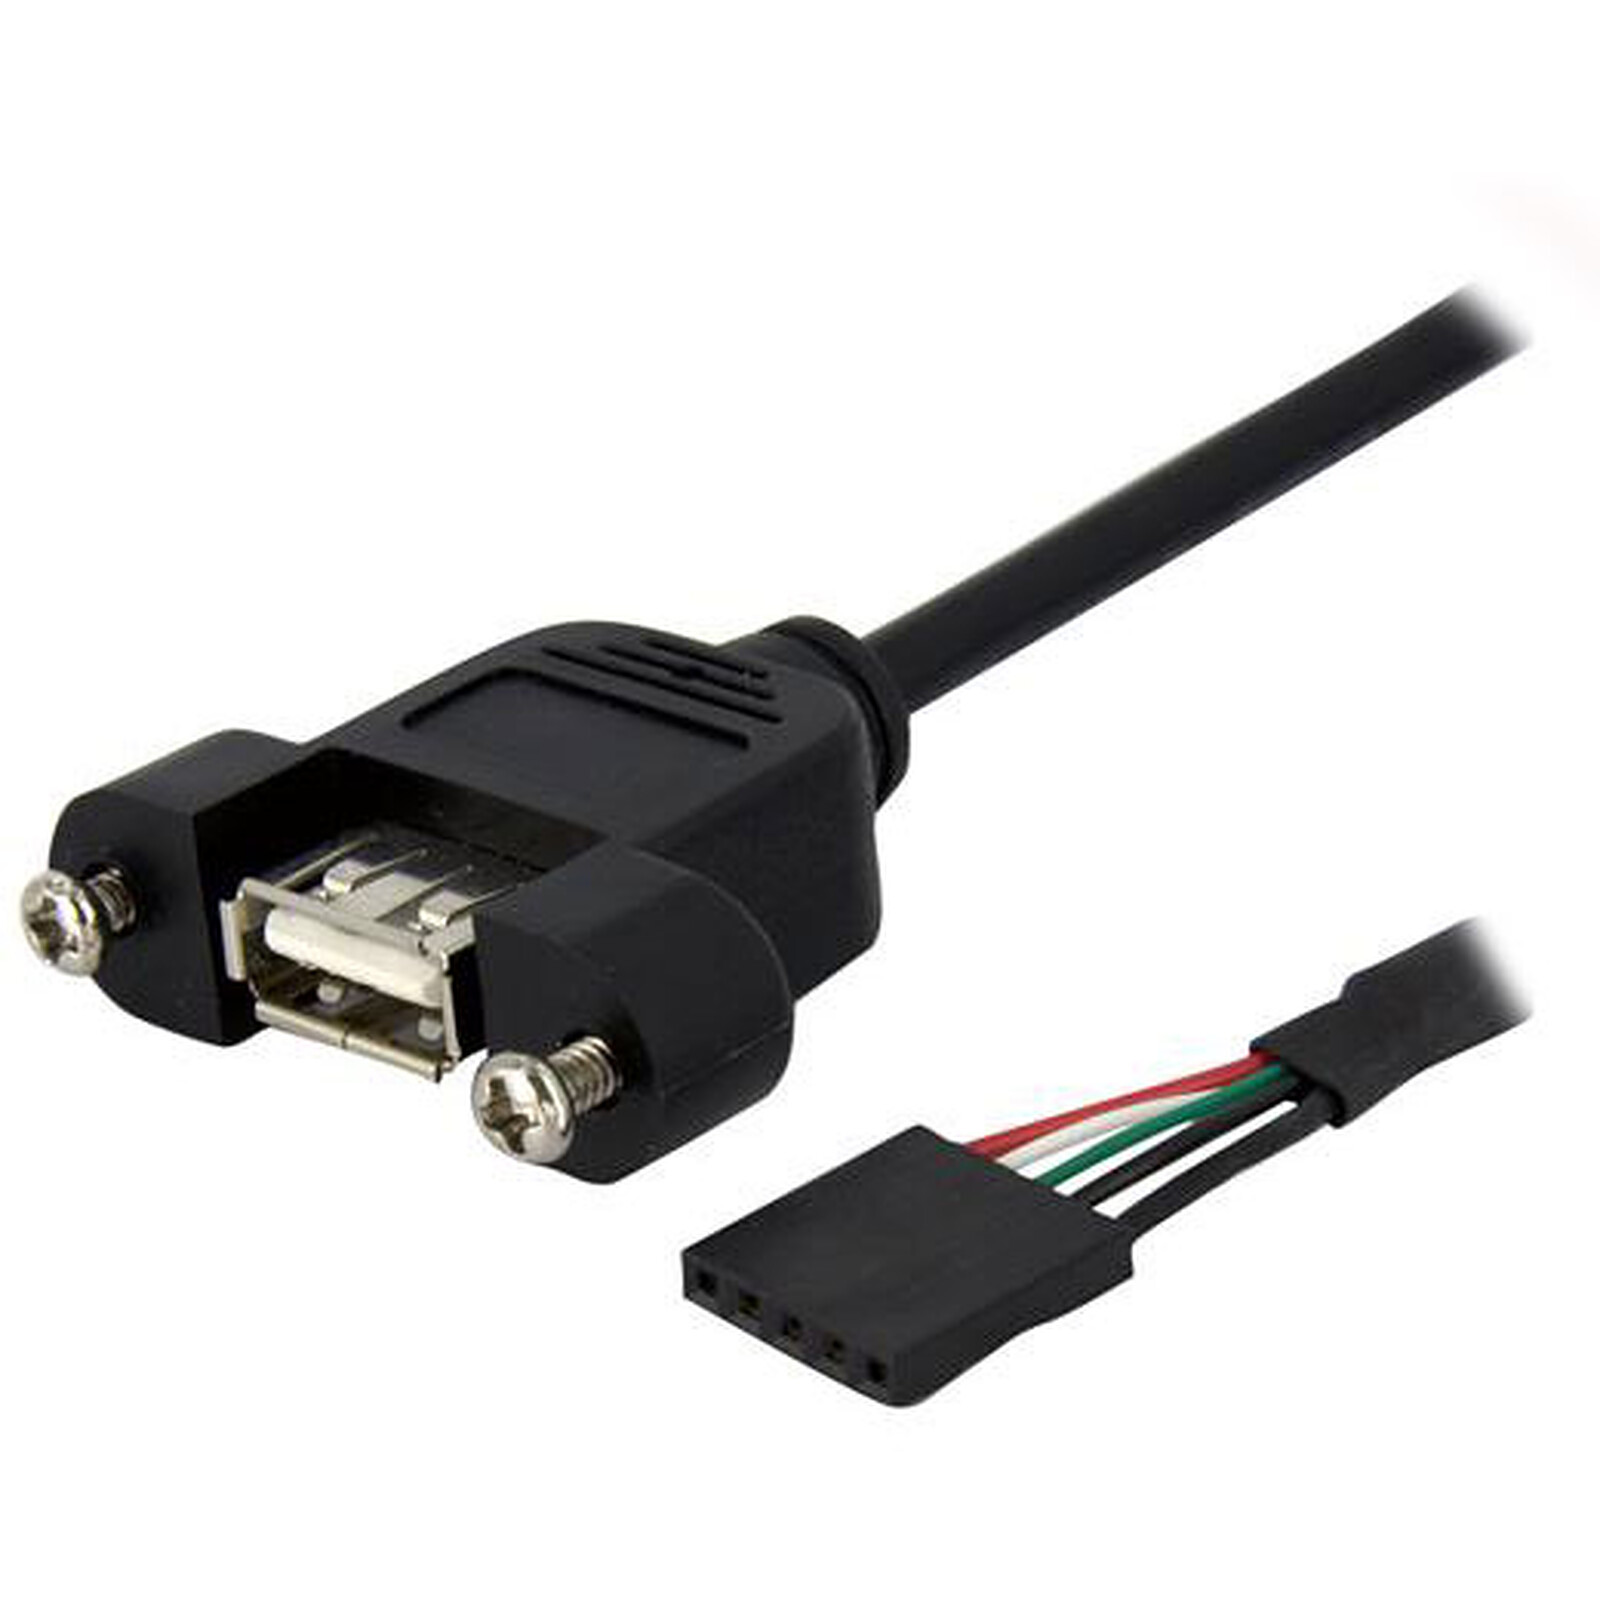 StarTech.com USB IDC 5-pin to internal USB A adapter cable - Internal connectivity StarTech.com on LDLC